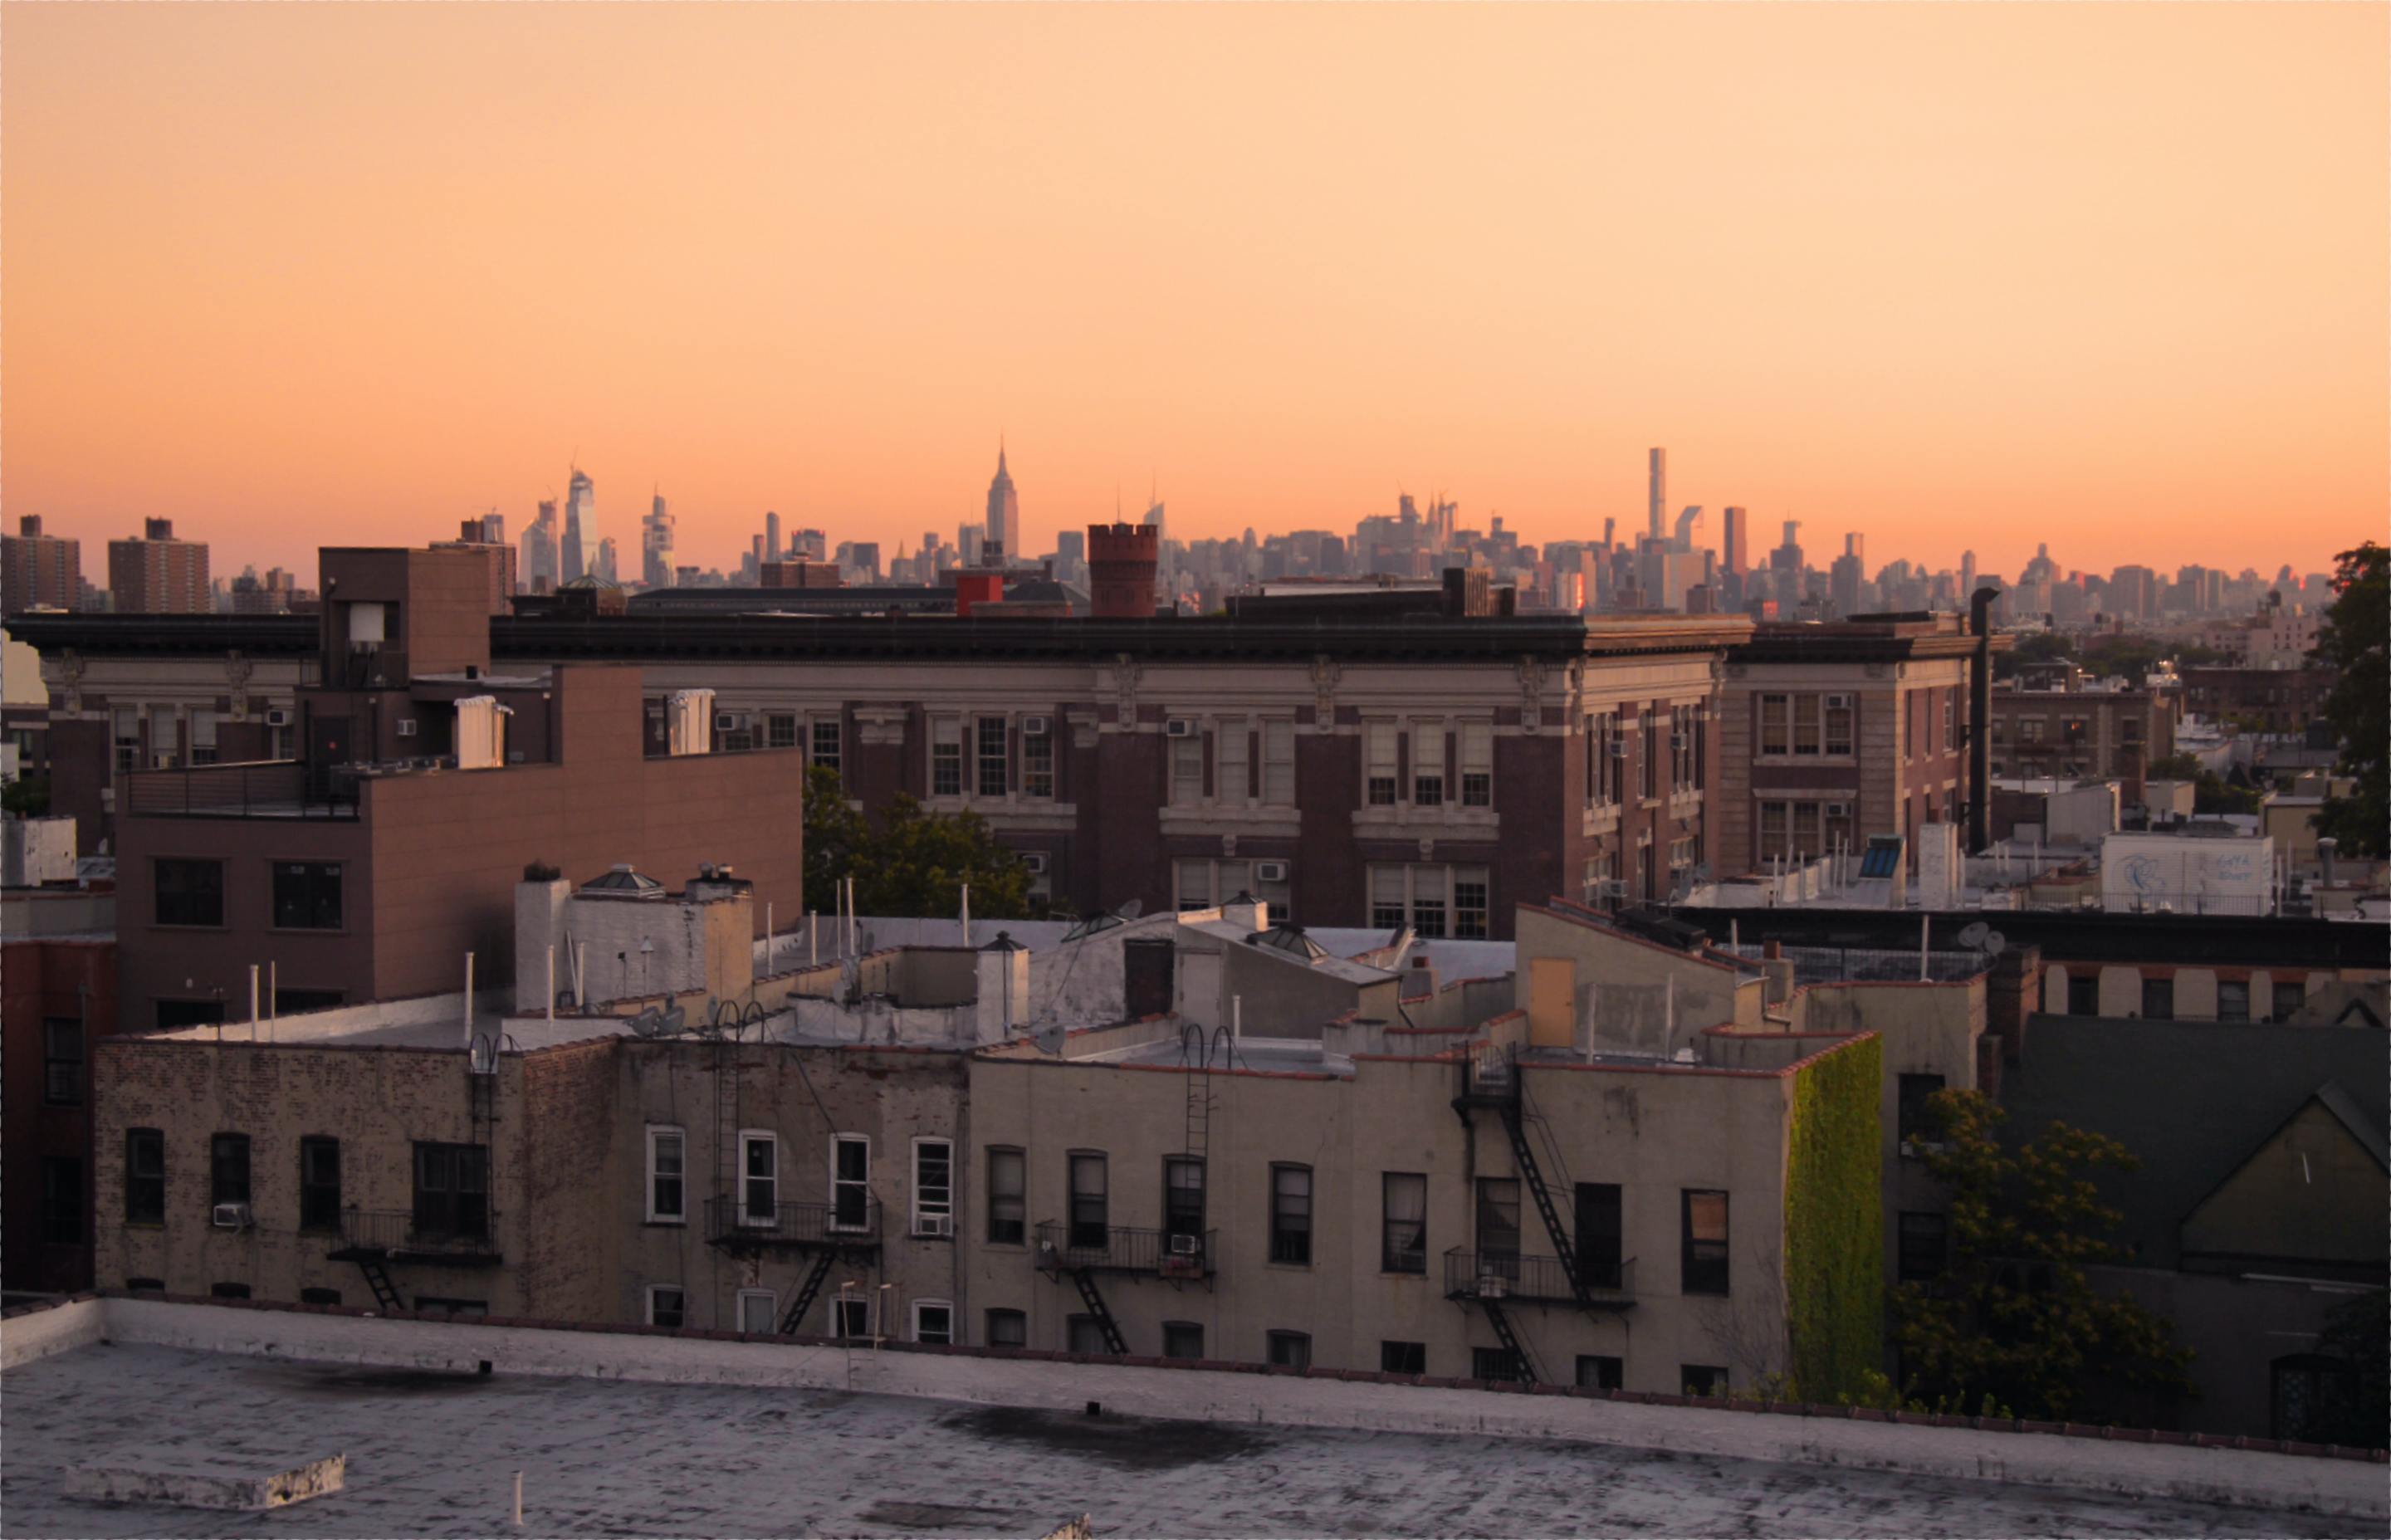 Sunrise over New York City tenements in Brooklyn, looking towards the Manhattan skyline